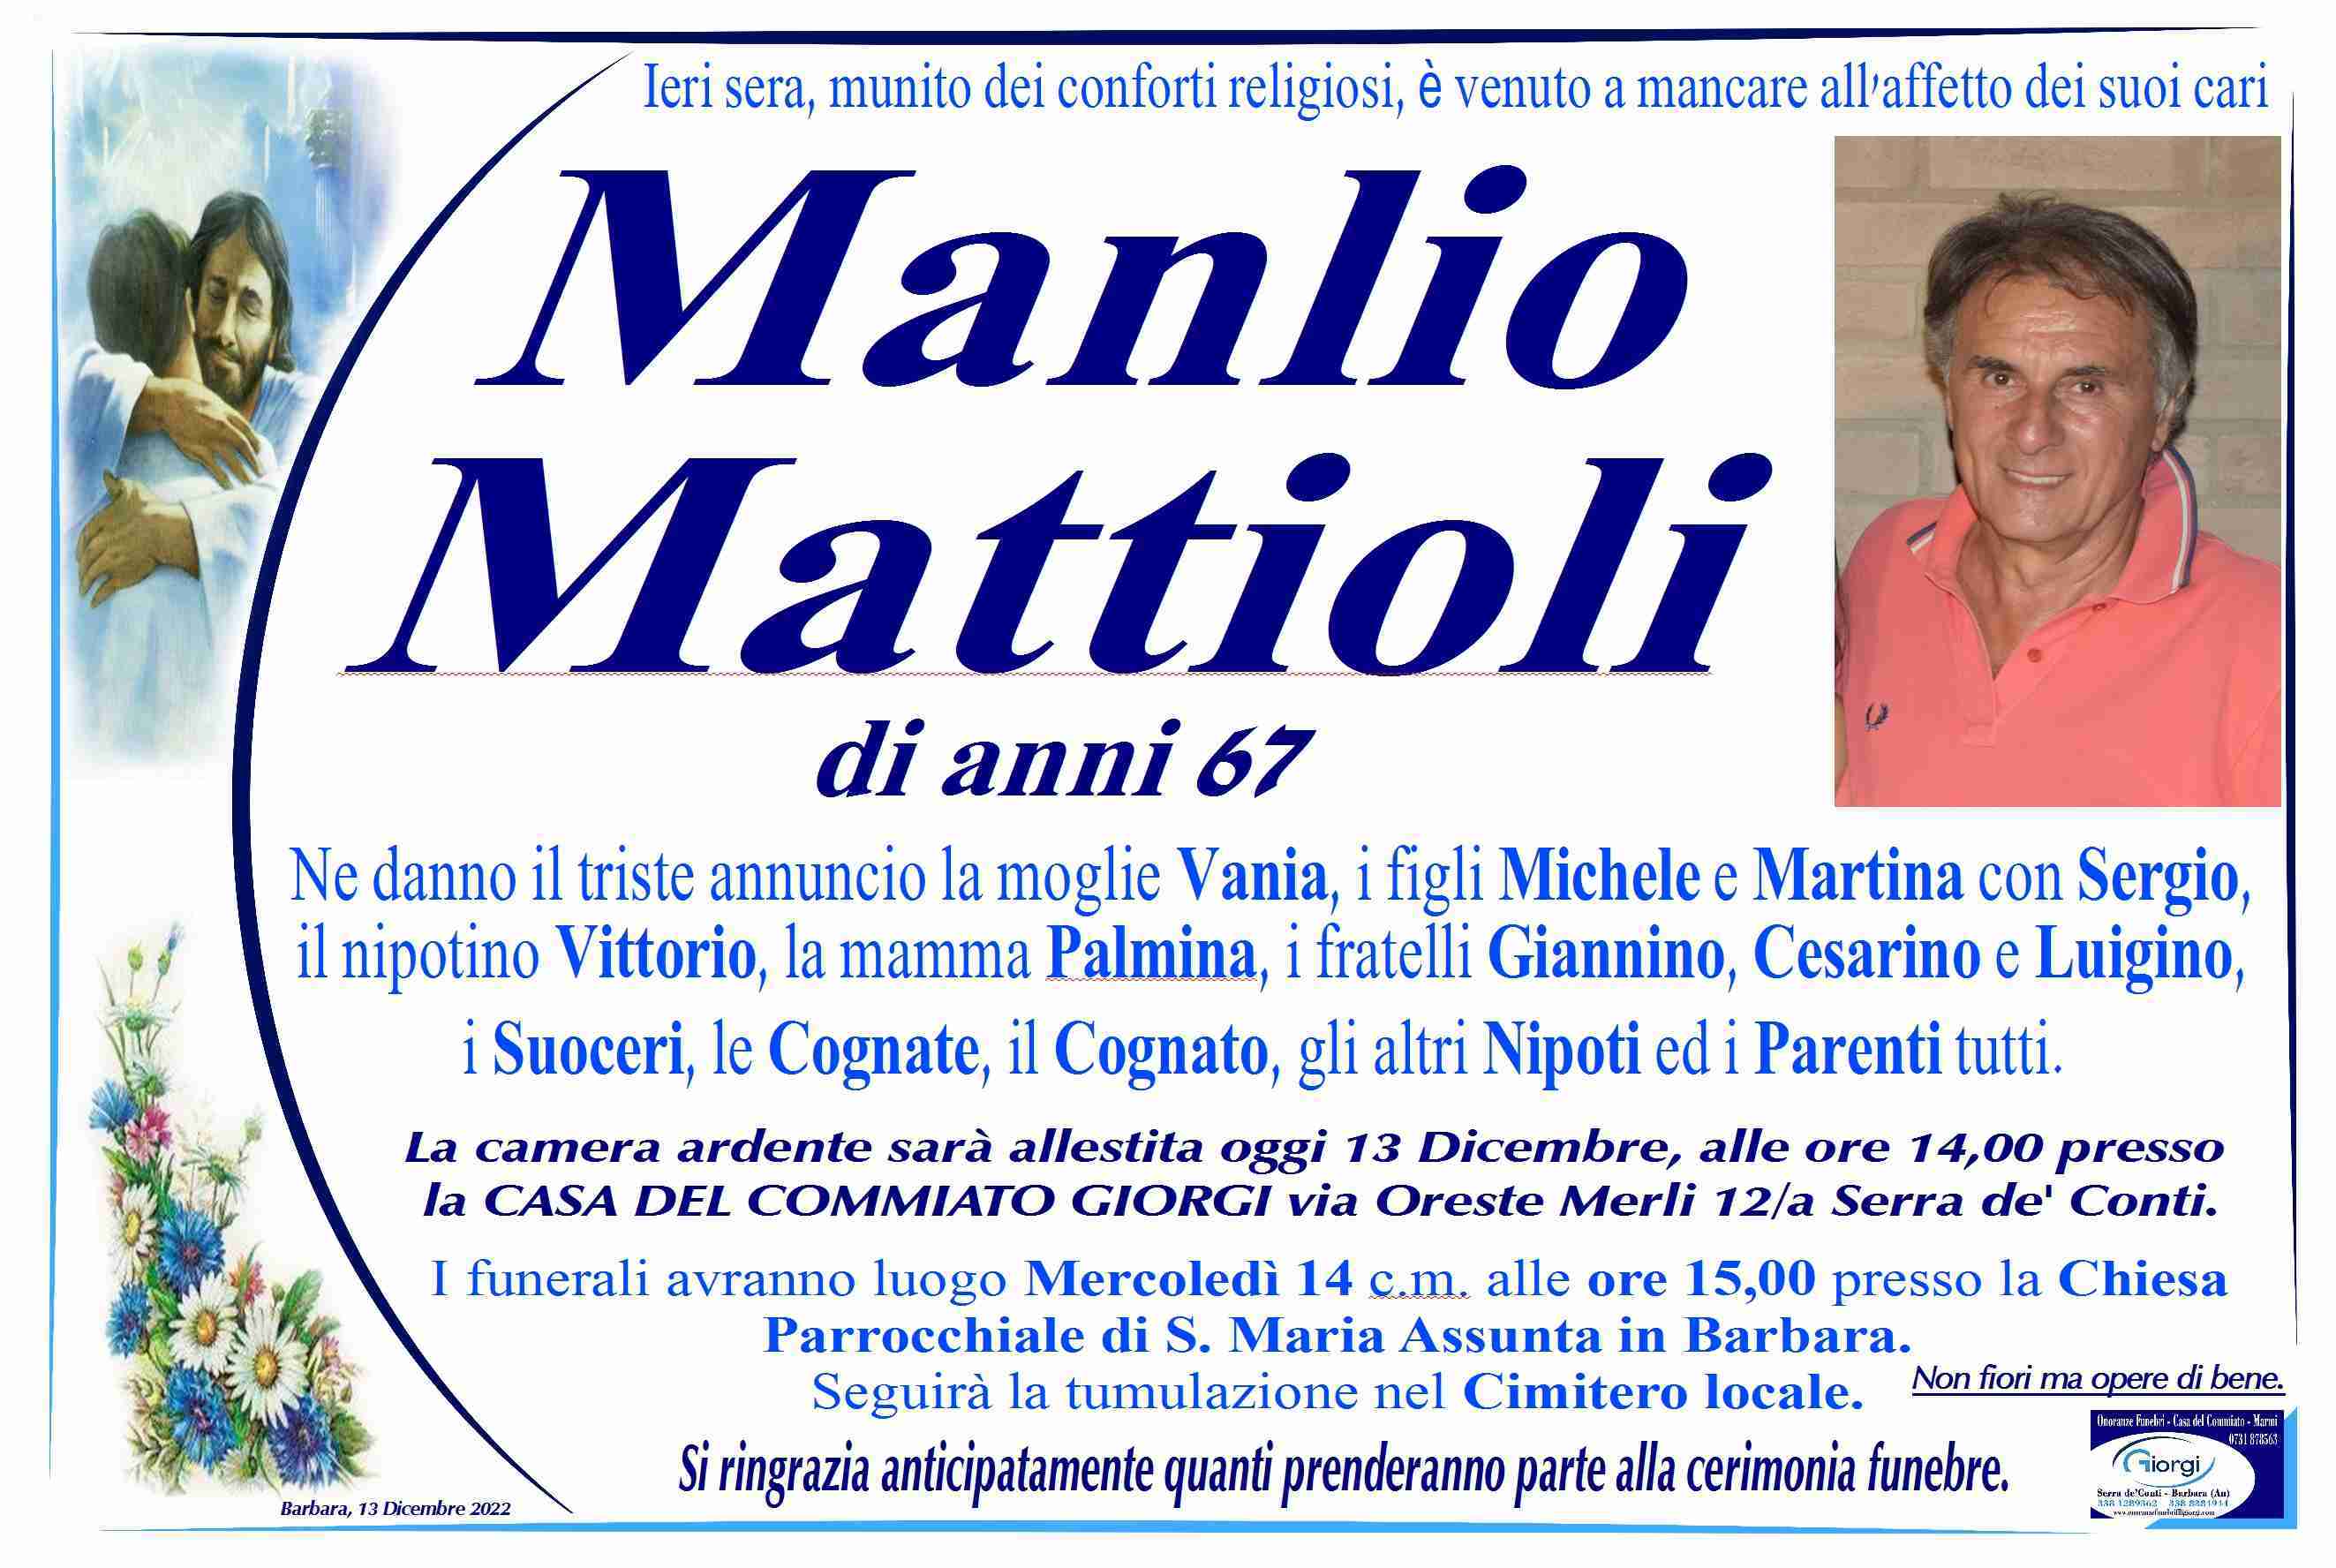 Manlio Mattioli